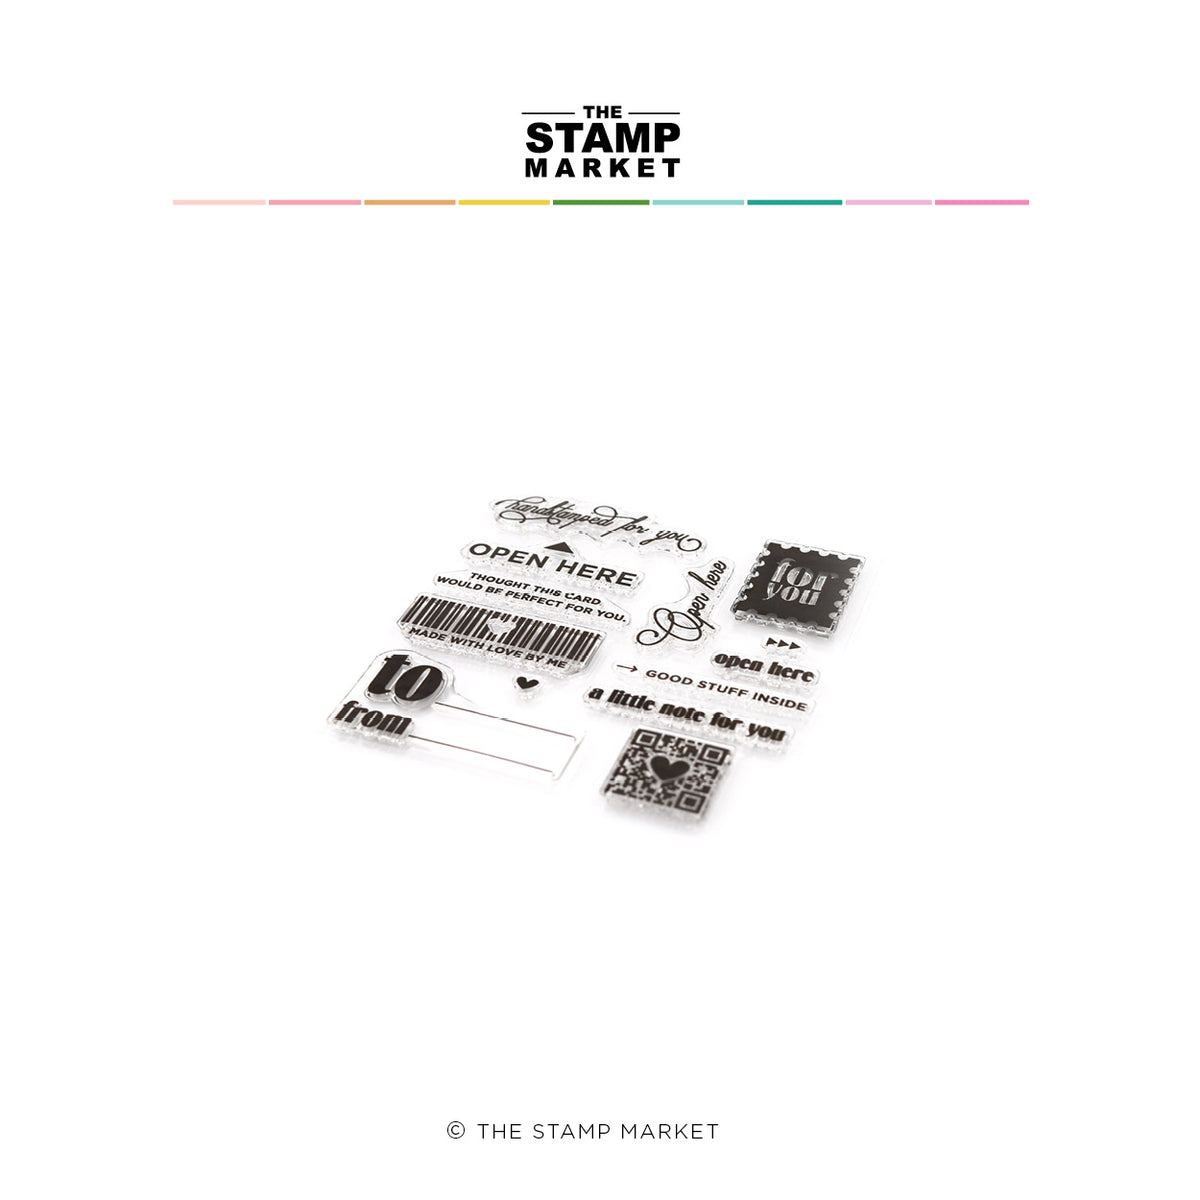 THE STAMP MARKET INK STORAGE – The Stamp Market